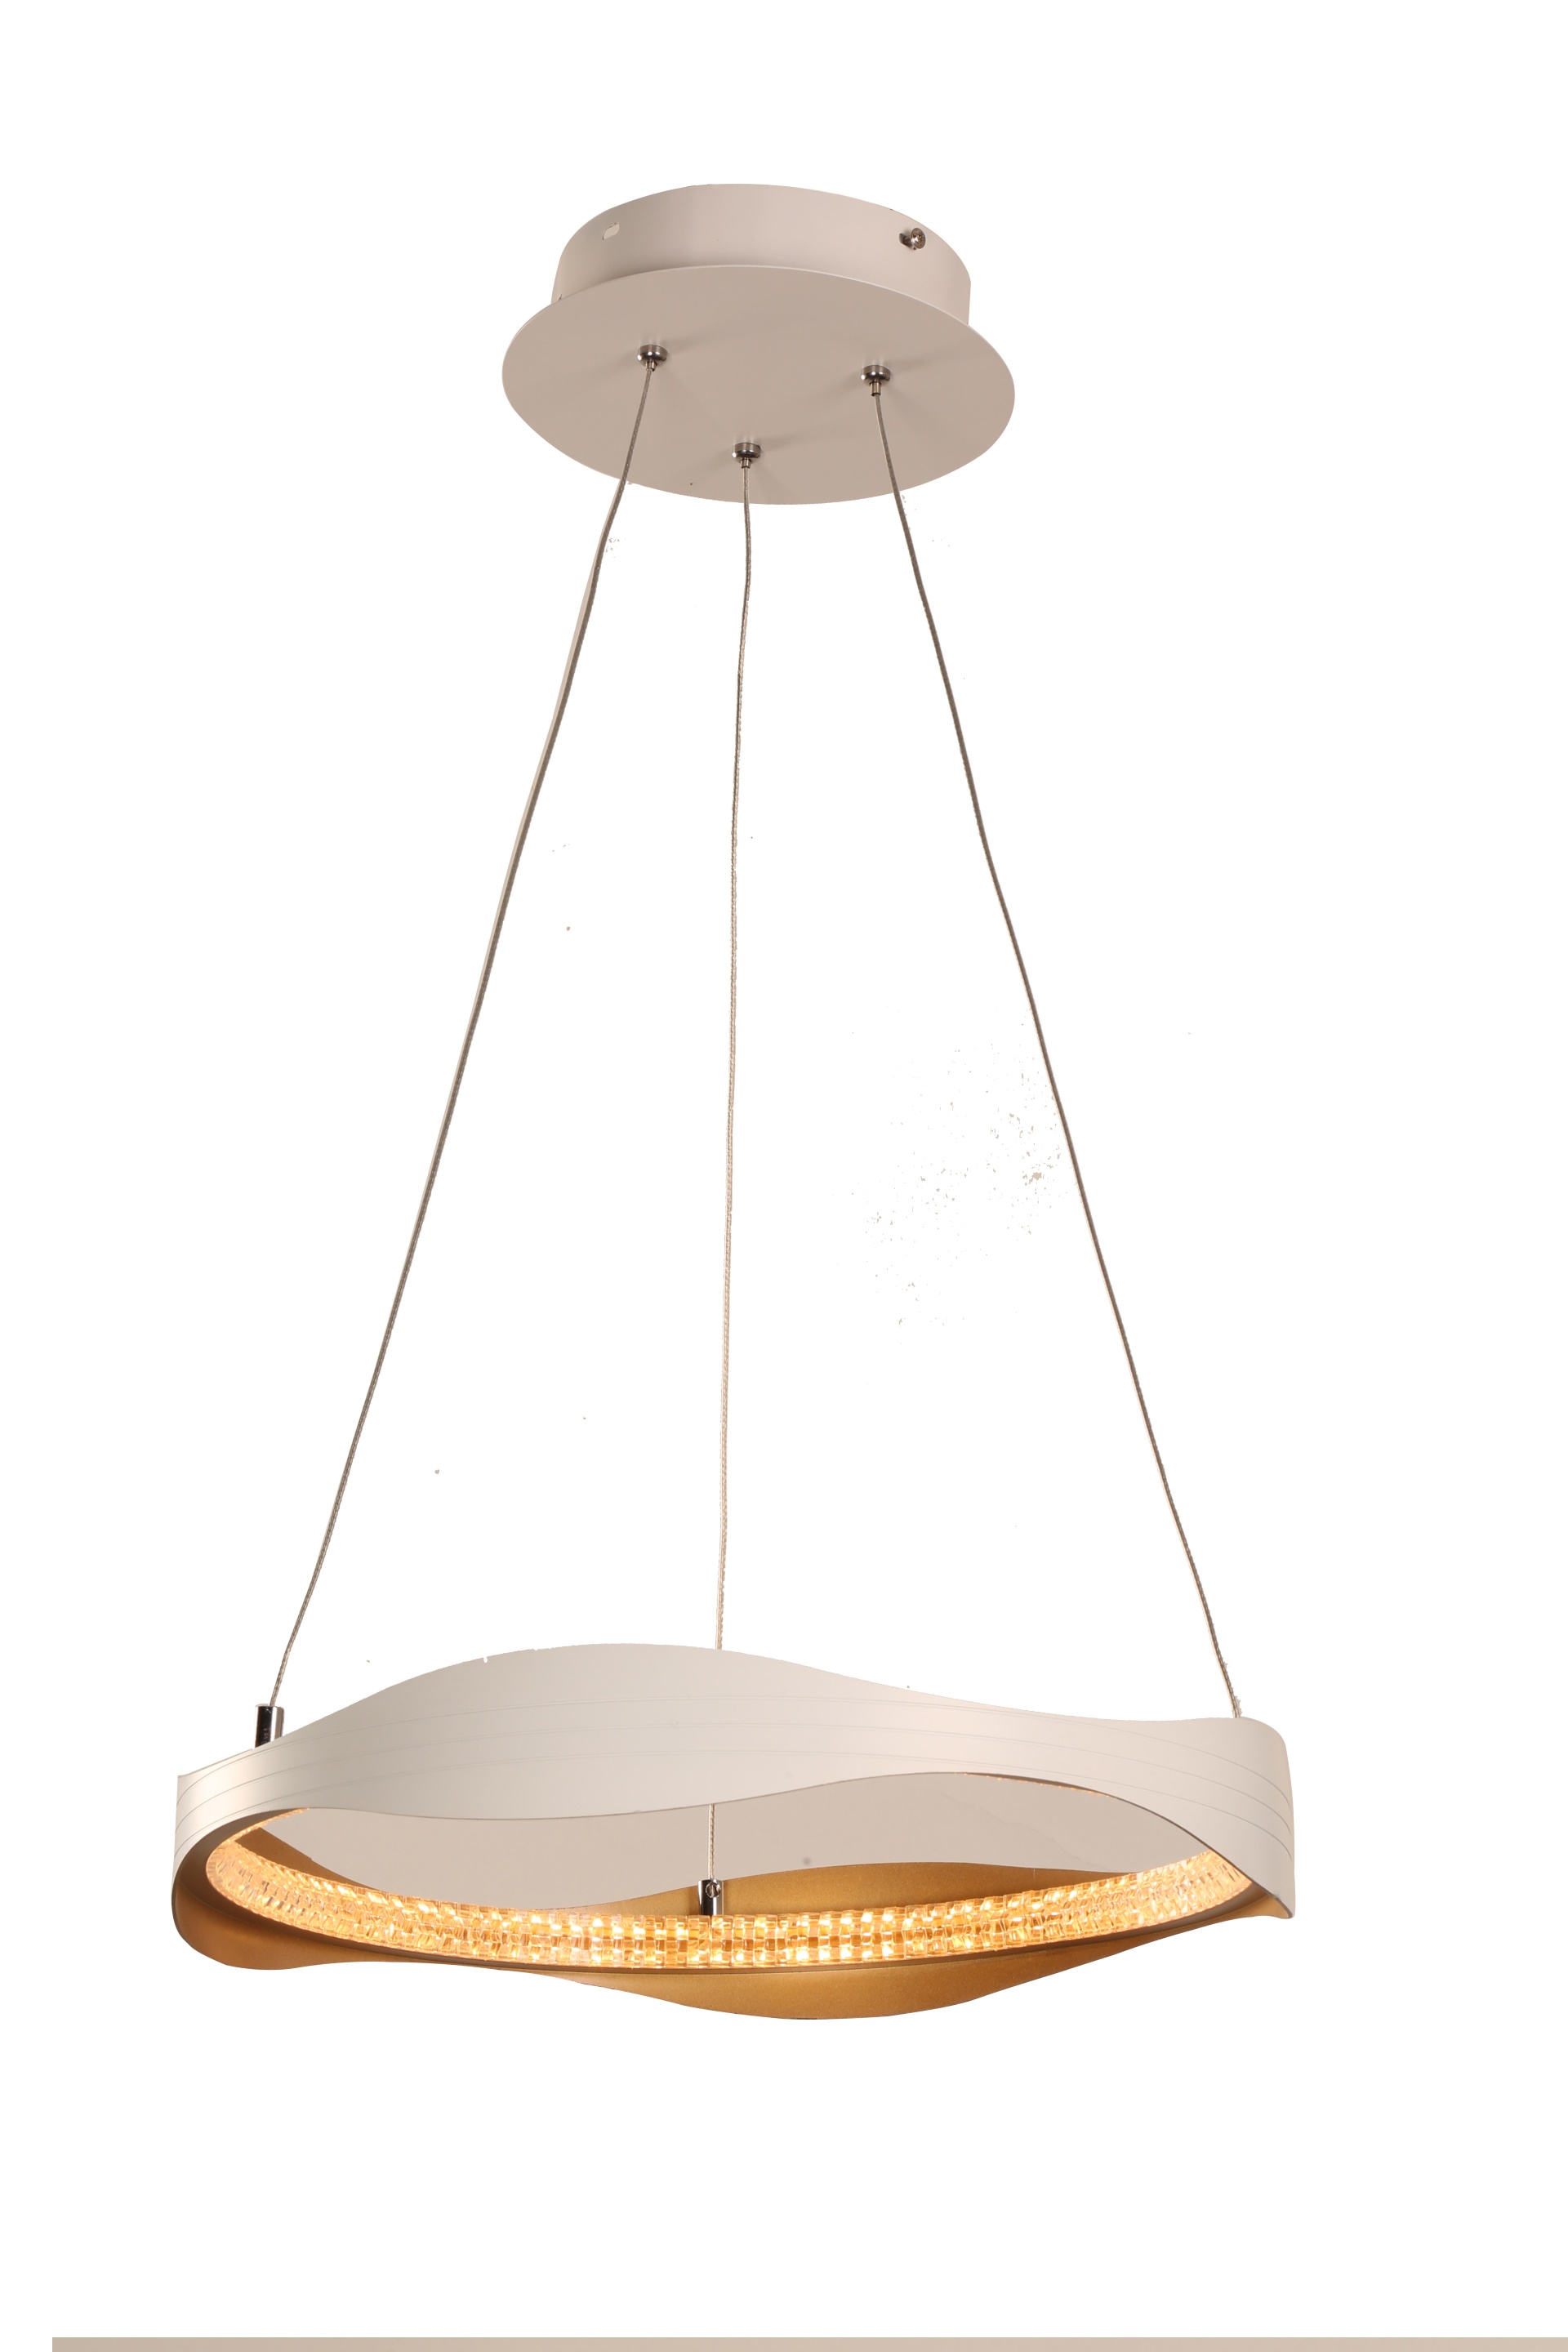 Saintly chandelier commercial pendant lights long-term-use for restaurant